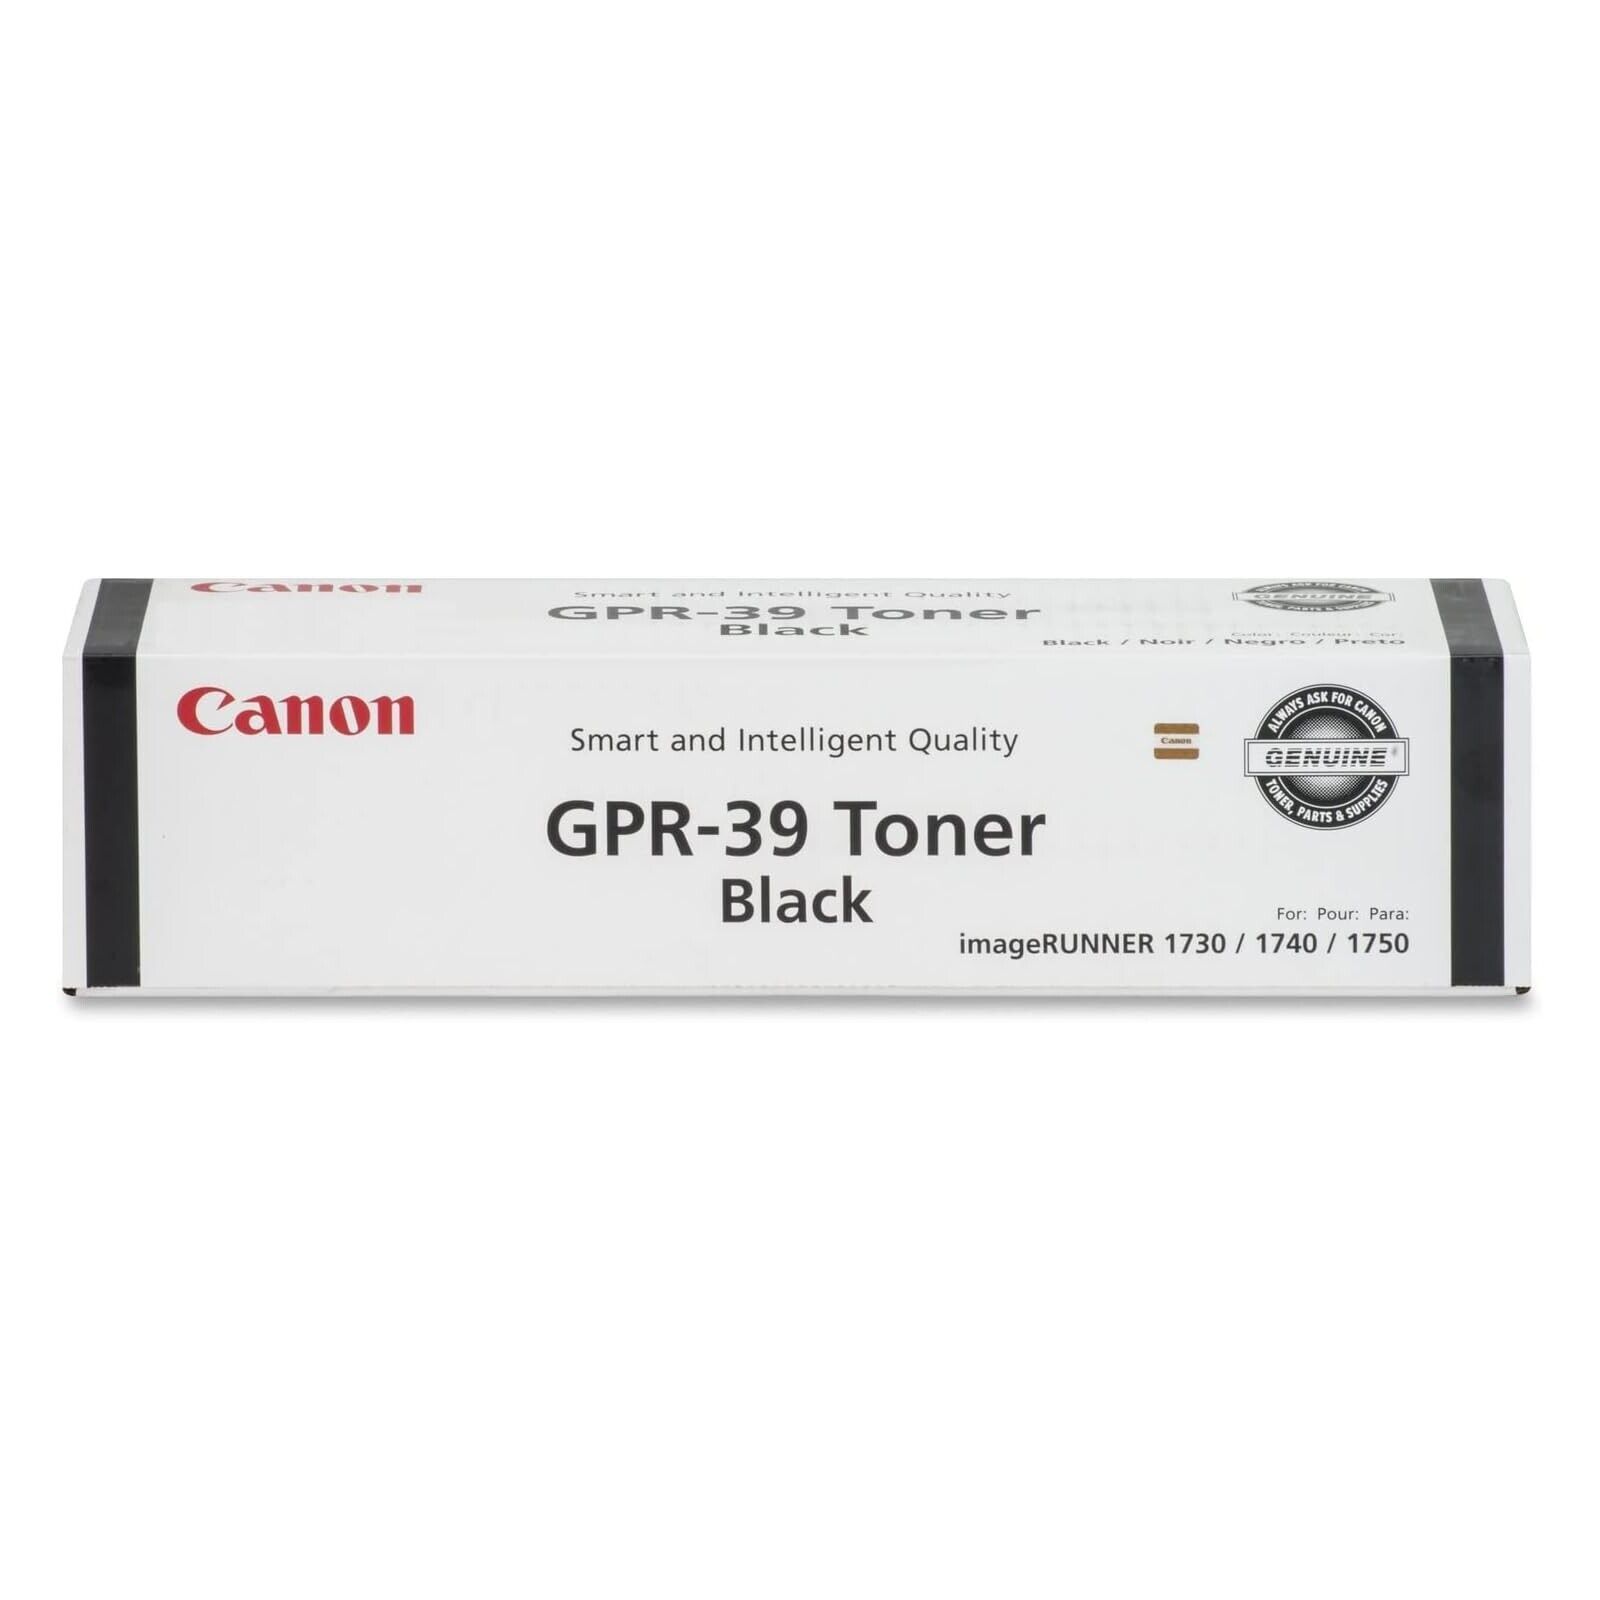 Canon GPR-39 Original Laser Toner Cartridge Black Pack 2787B003AA